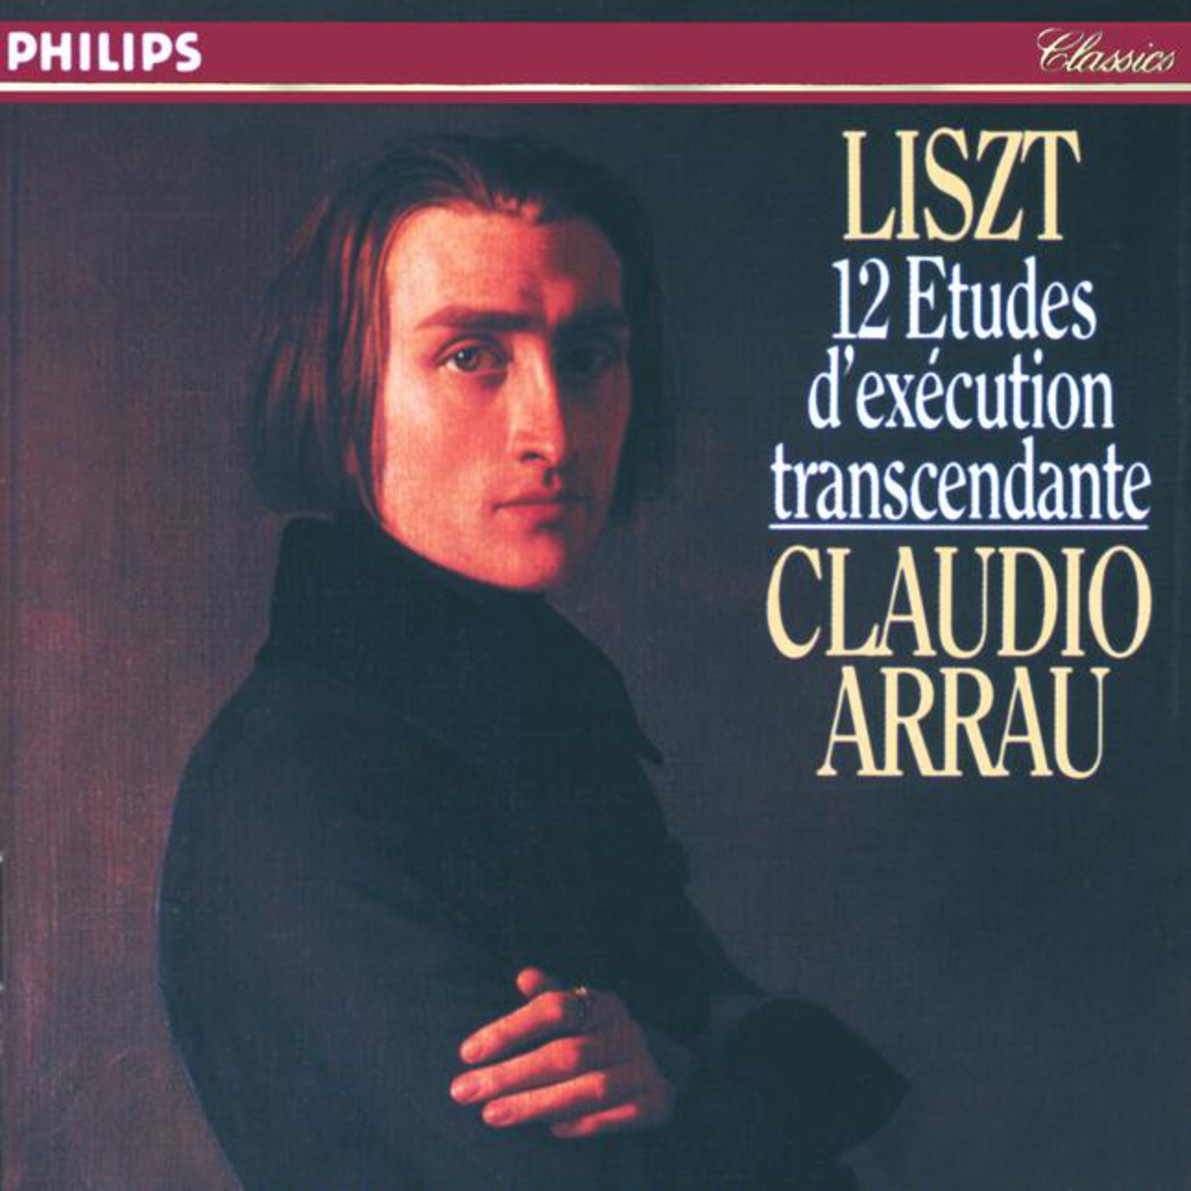 Liszt: 12 Etudes d' exe cution transcendante, S. 139  No. 10 Allegro agitato molto